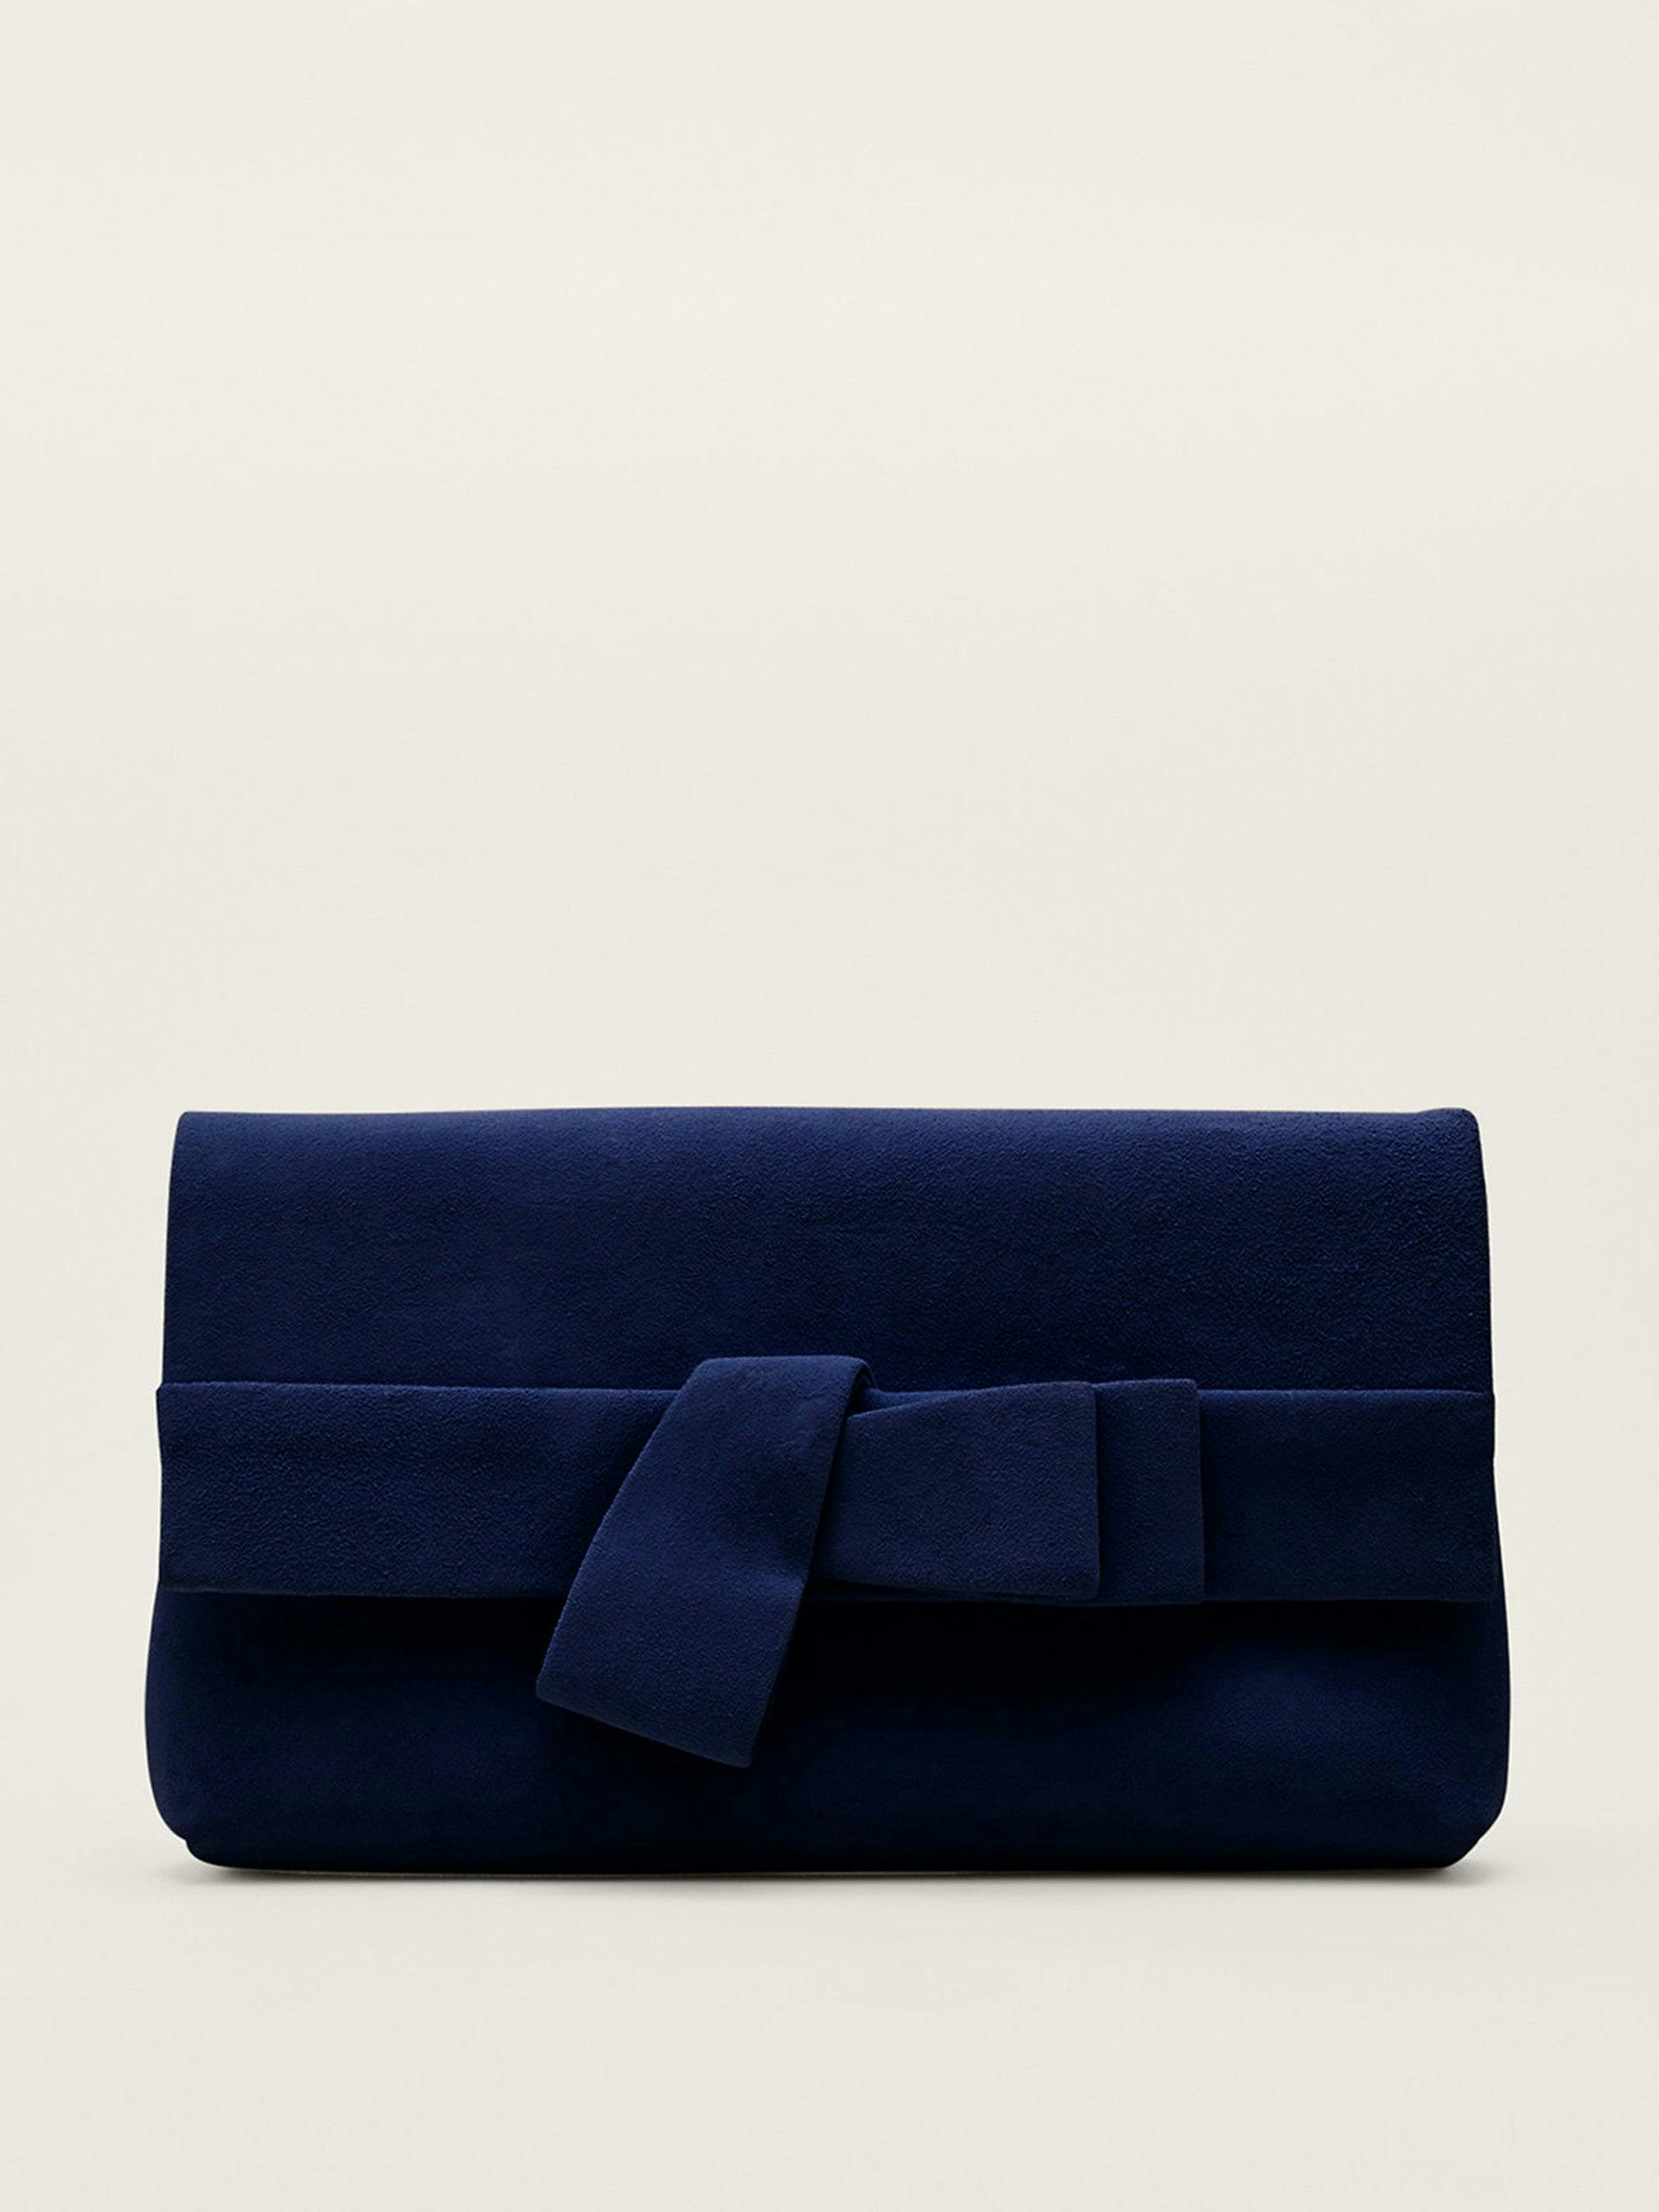 Blue suede clutch bag